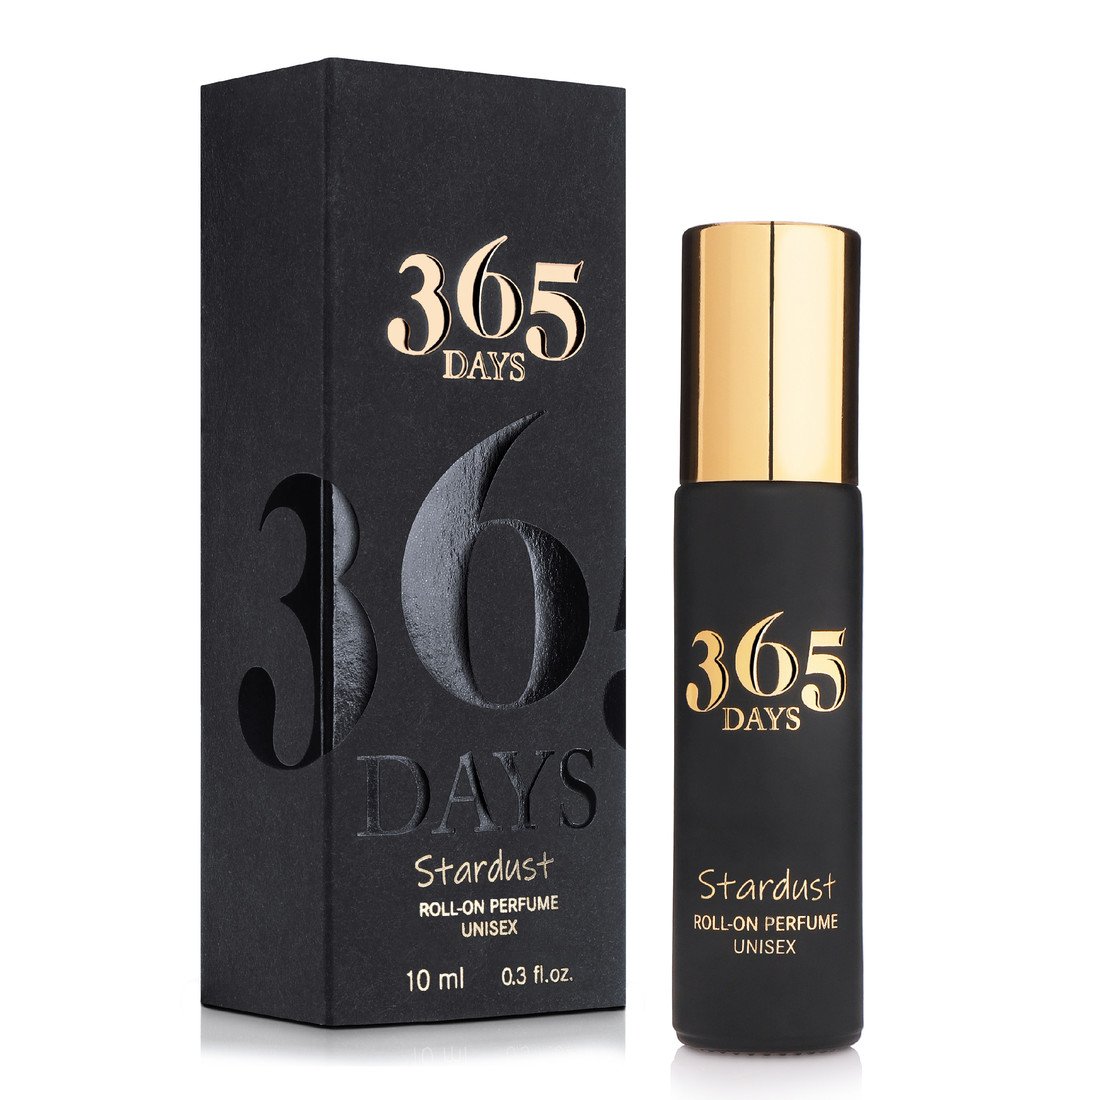 365 Days Stardust Roll-on Perfume unisex roll-on 10 ml